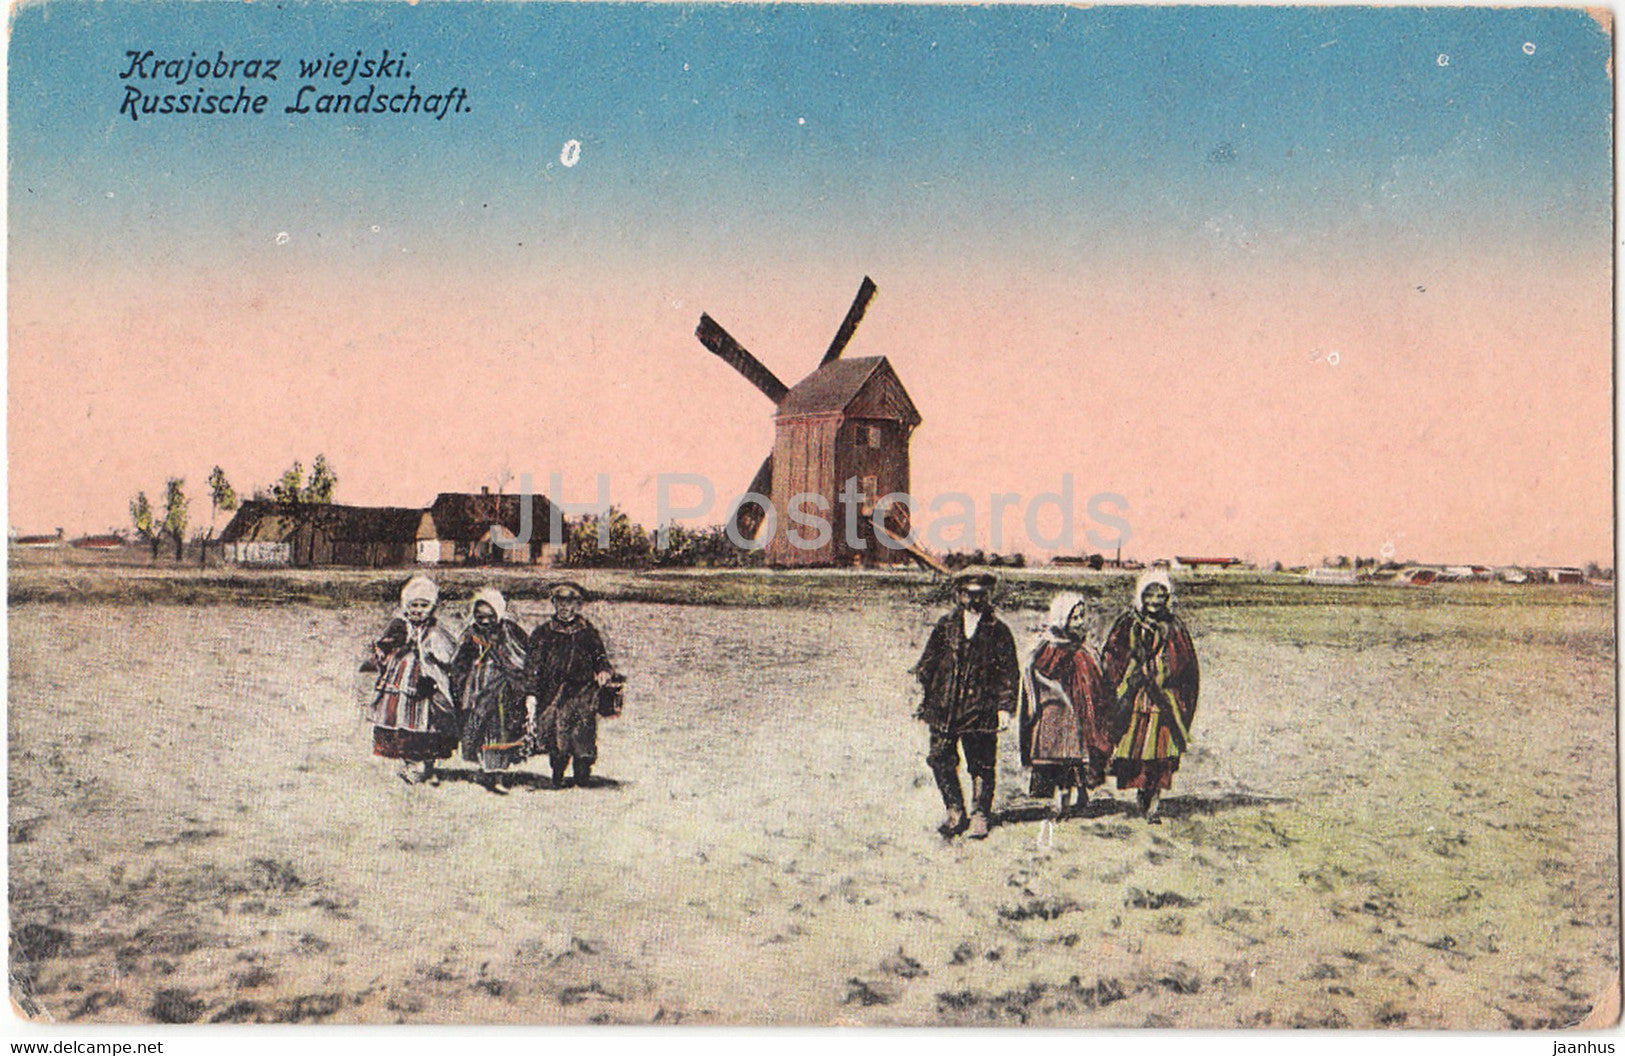 Krajobraz wiejski - Russische Landschaft - windmill - Feldpost - old postcard - 1917 - Russia - used - JH Postcards